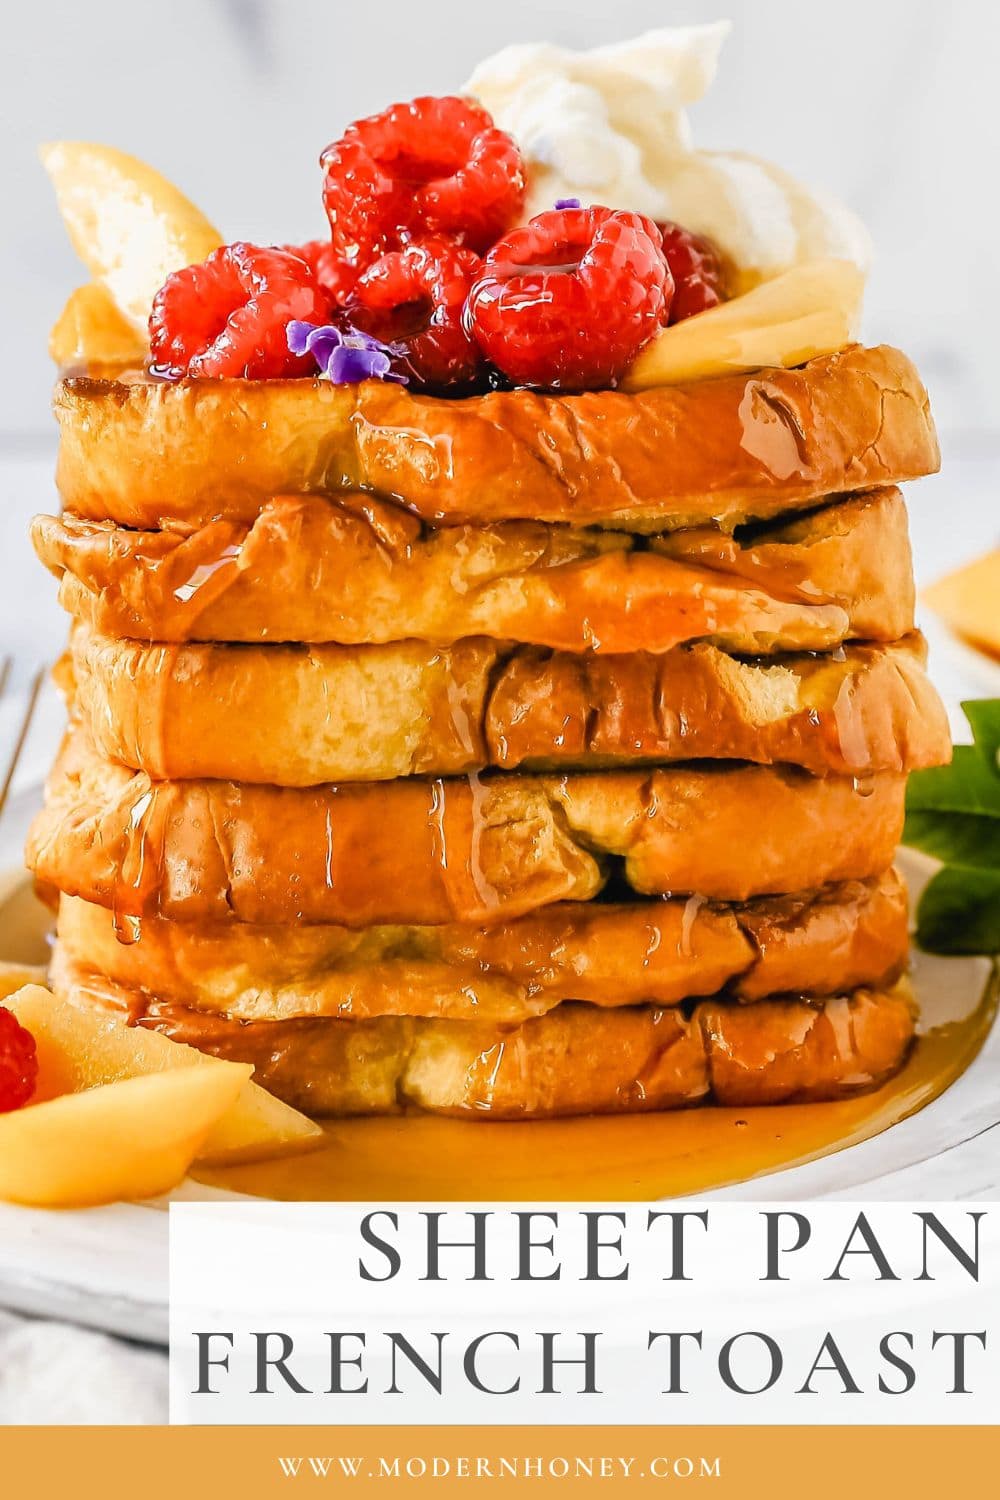 https://www.modernhoney.com/wp-content/uploads/2022/06/Sheet-Pan-French-Toast-Recipe.jpg